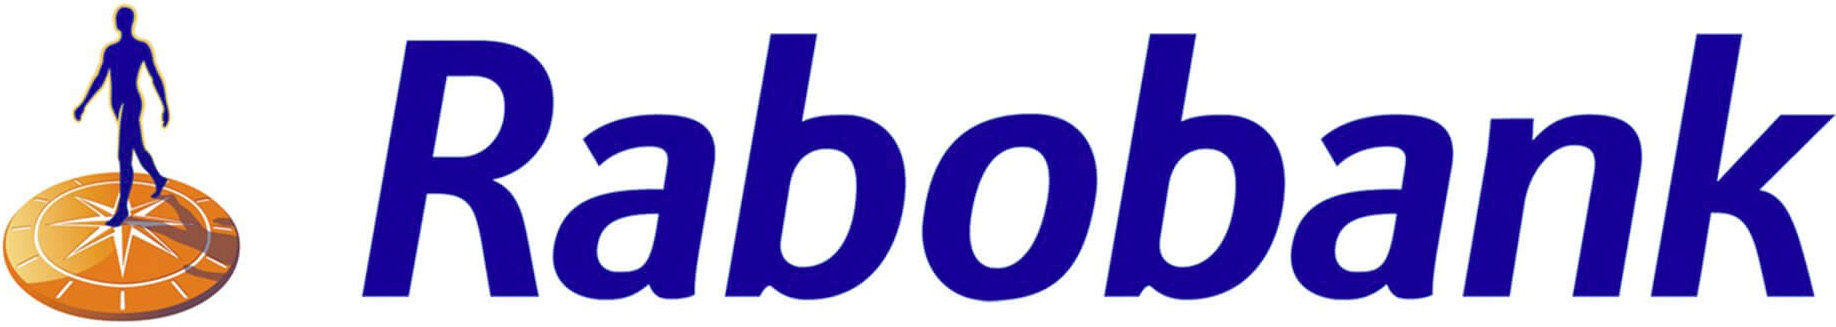 rabobank-logo-picture.jpeg